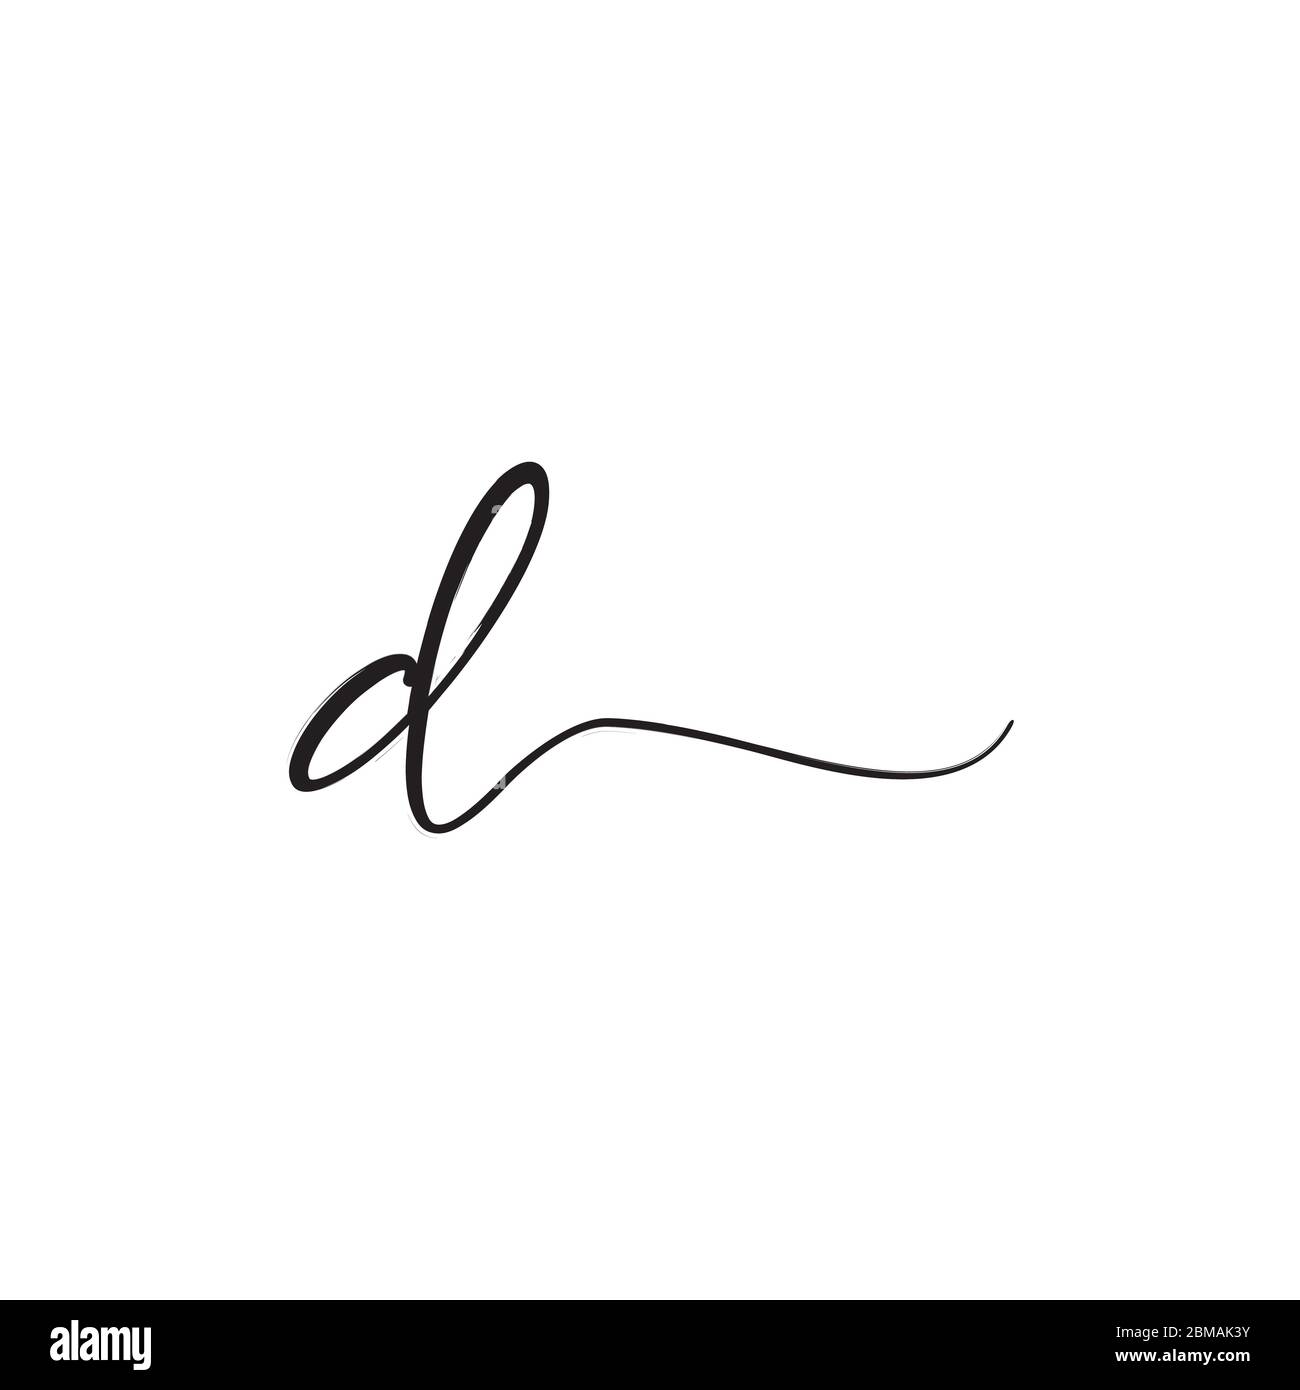 D signature letter logo design concept Stock Vector Image & Art - Alamy